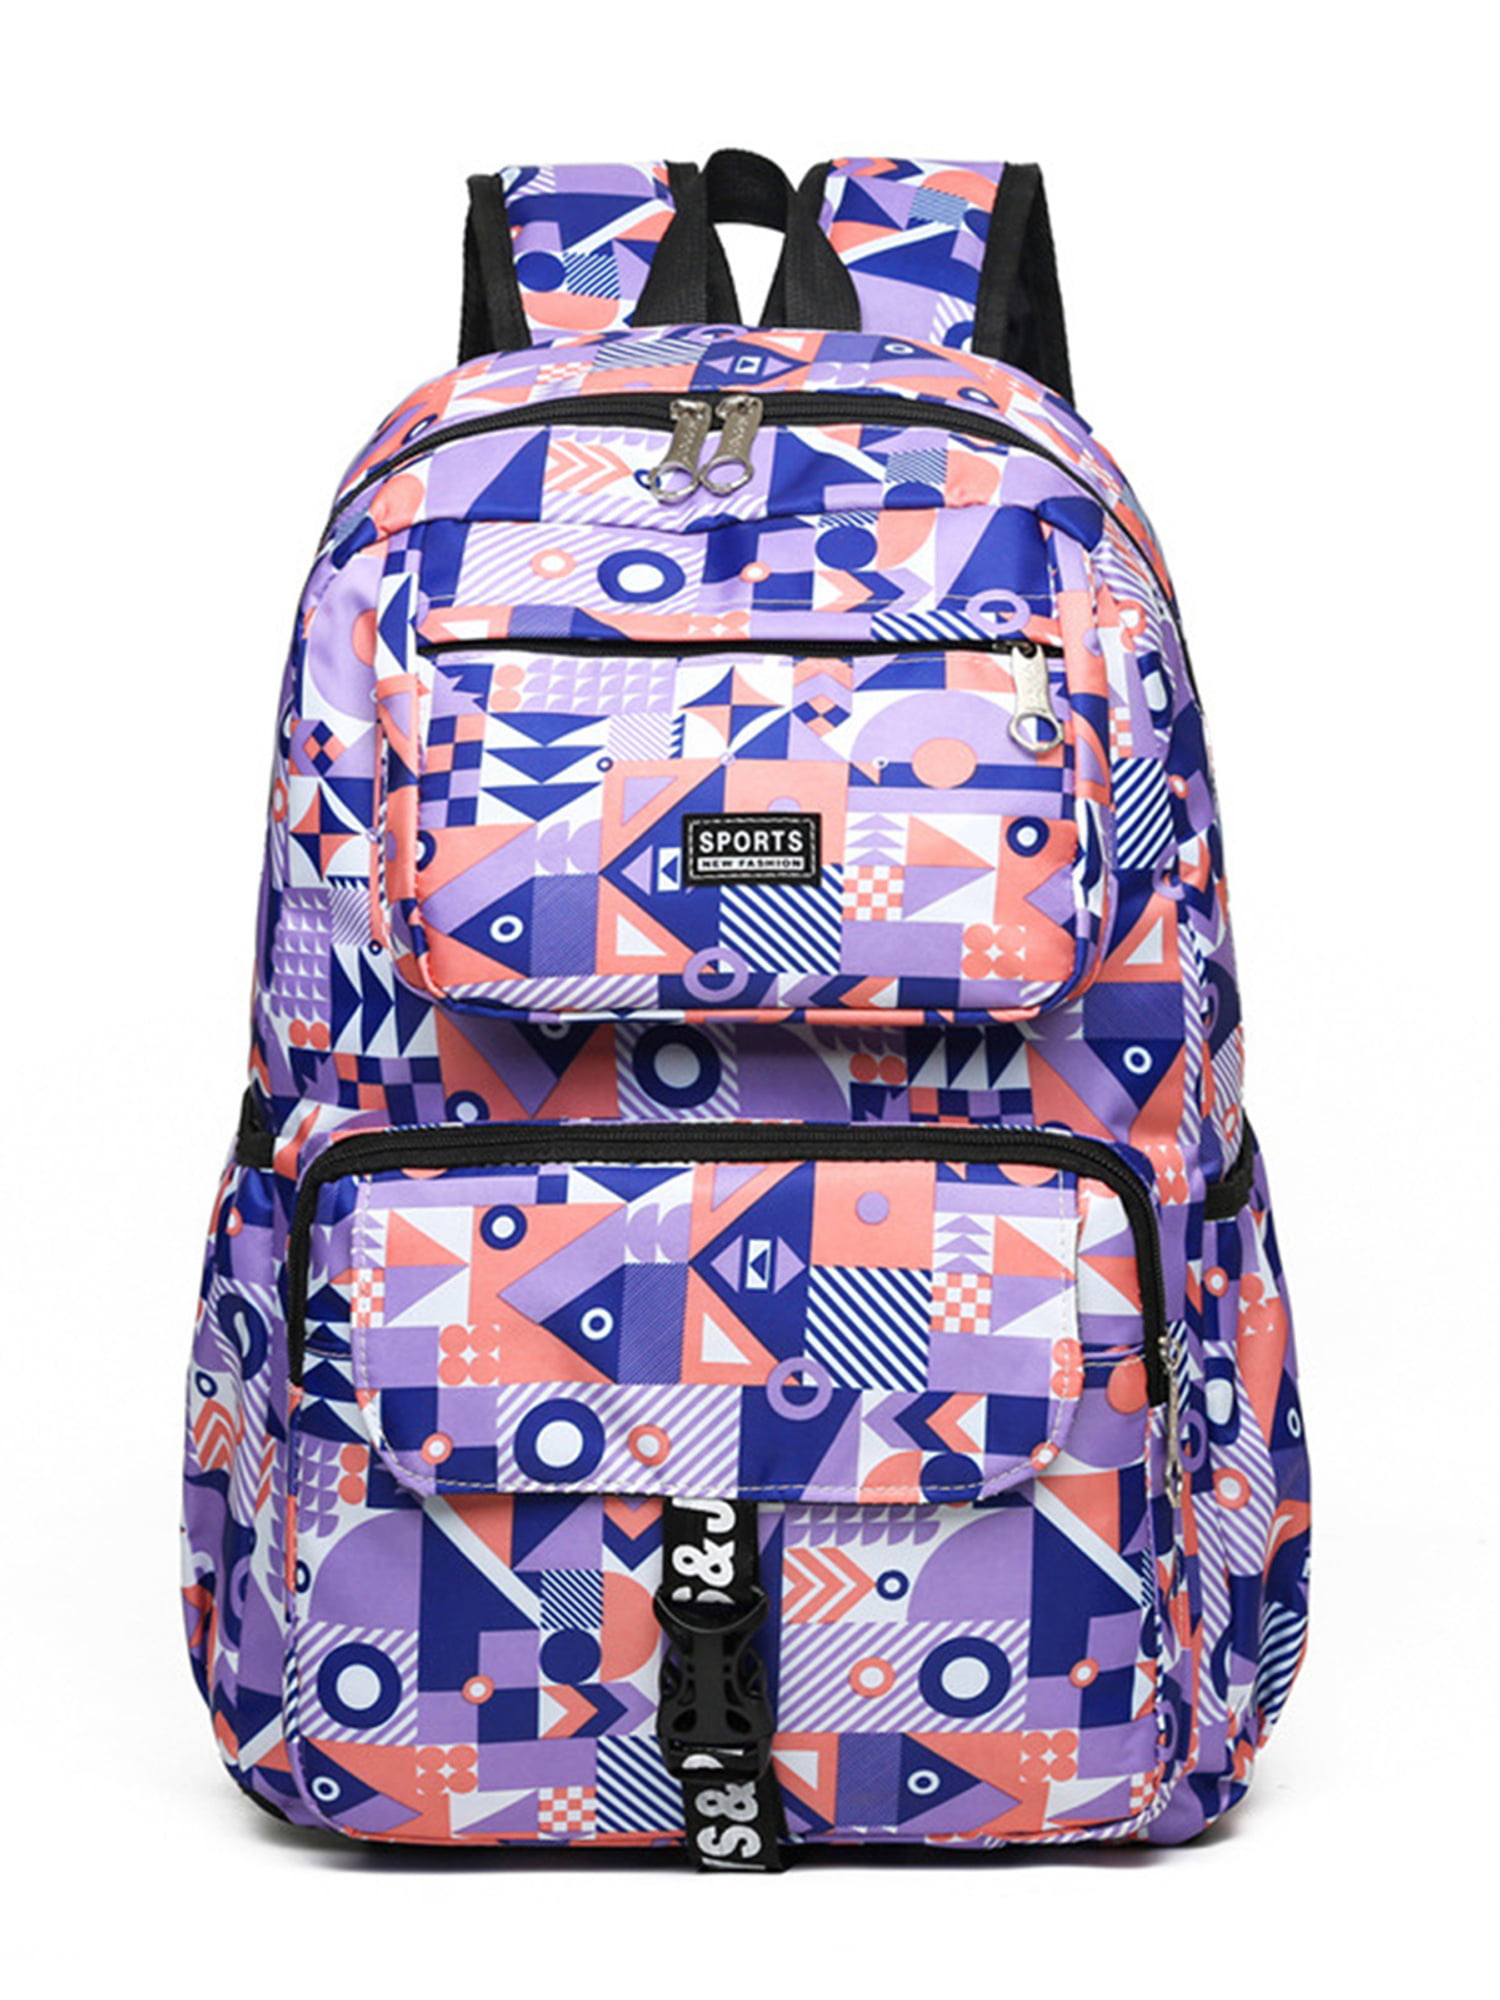 Geometric Color Print Laptop Backpack High School Bookbag Casual Travel Daypack